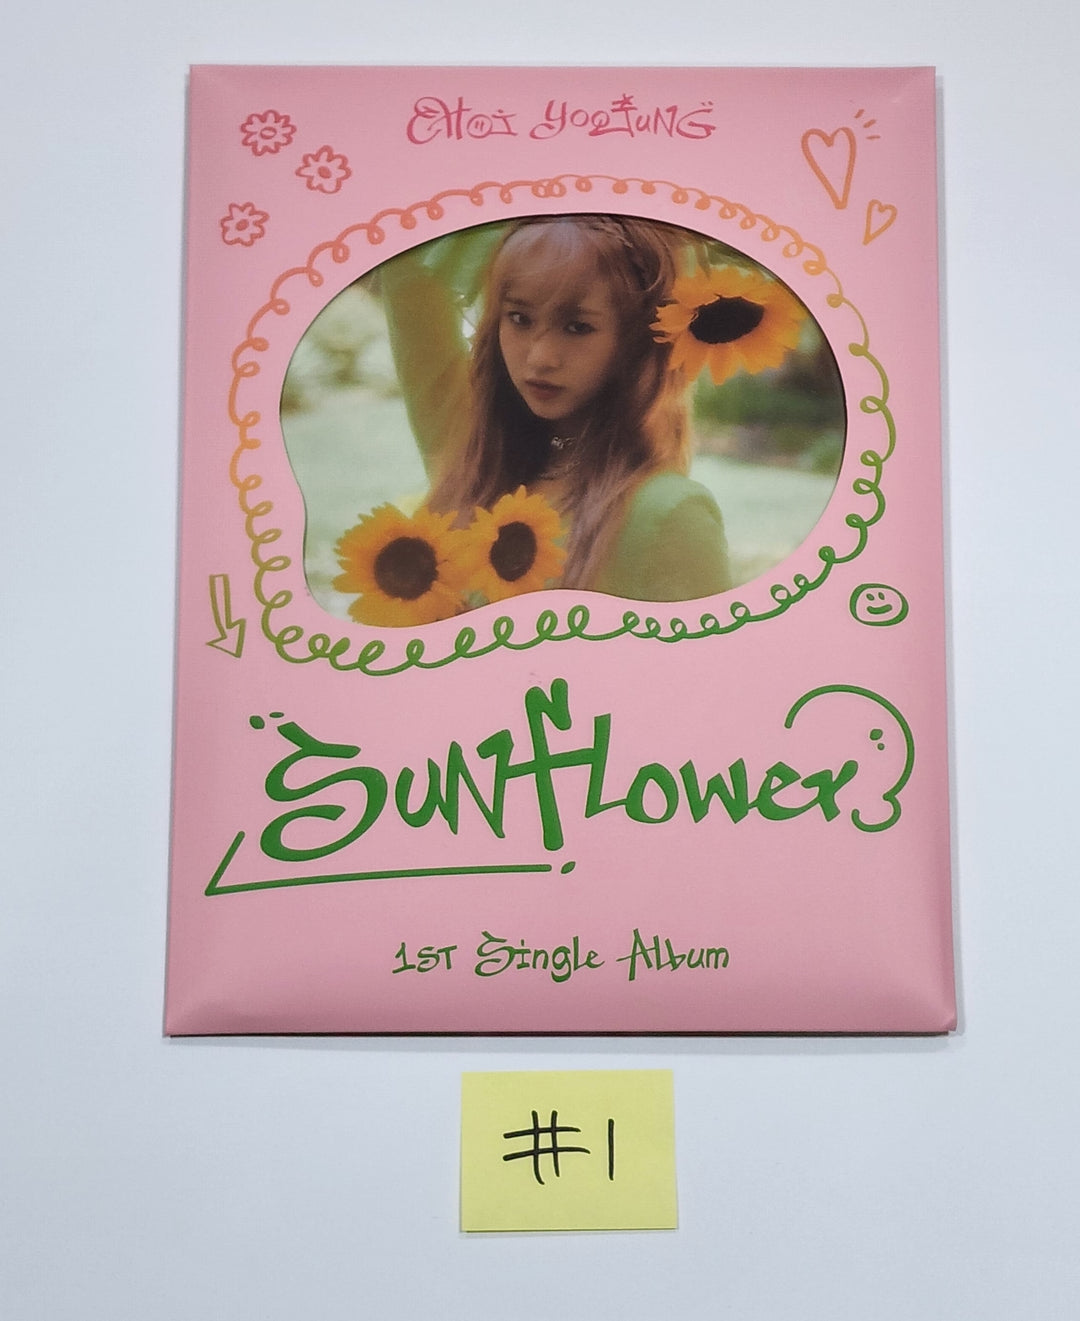 Choi Yoojung (of Weki Meki) "Sunflower" - Hand Autographed(Signed) Promo Album